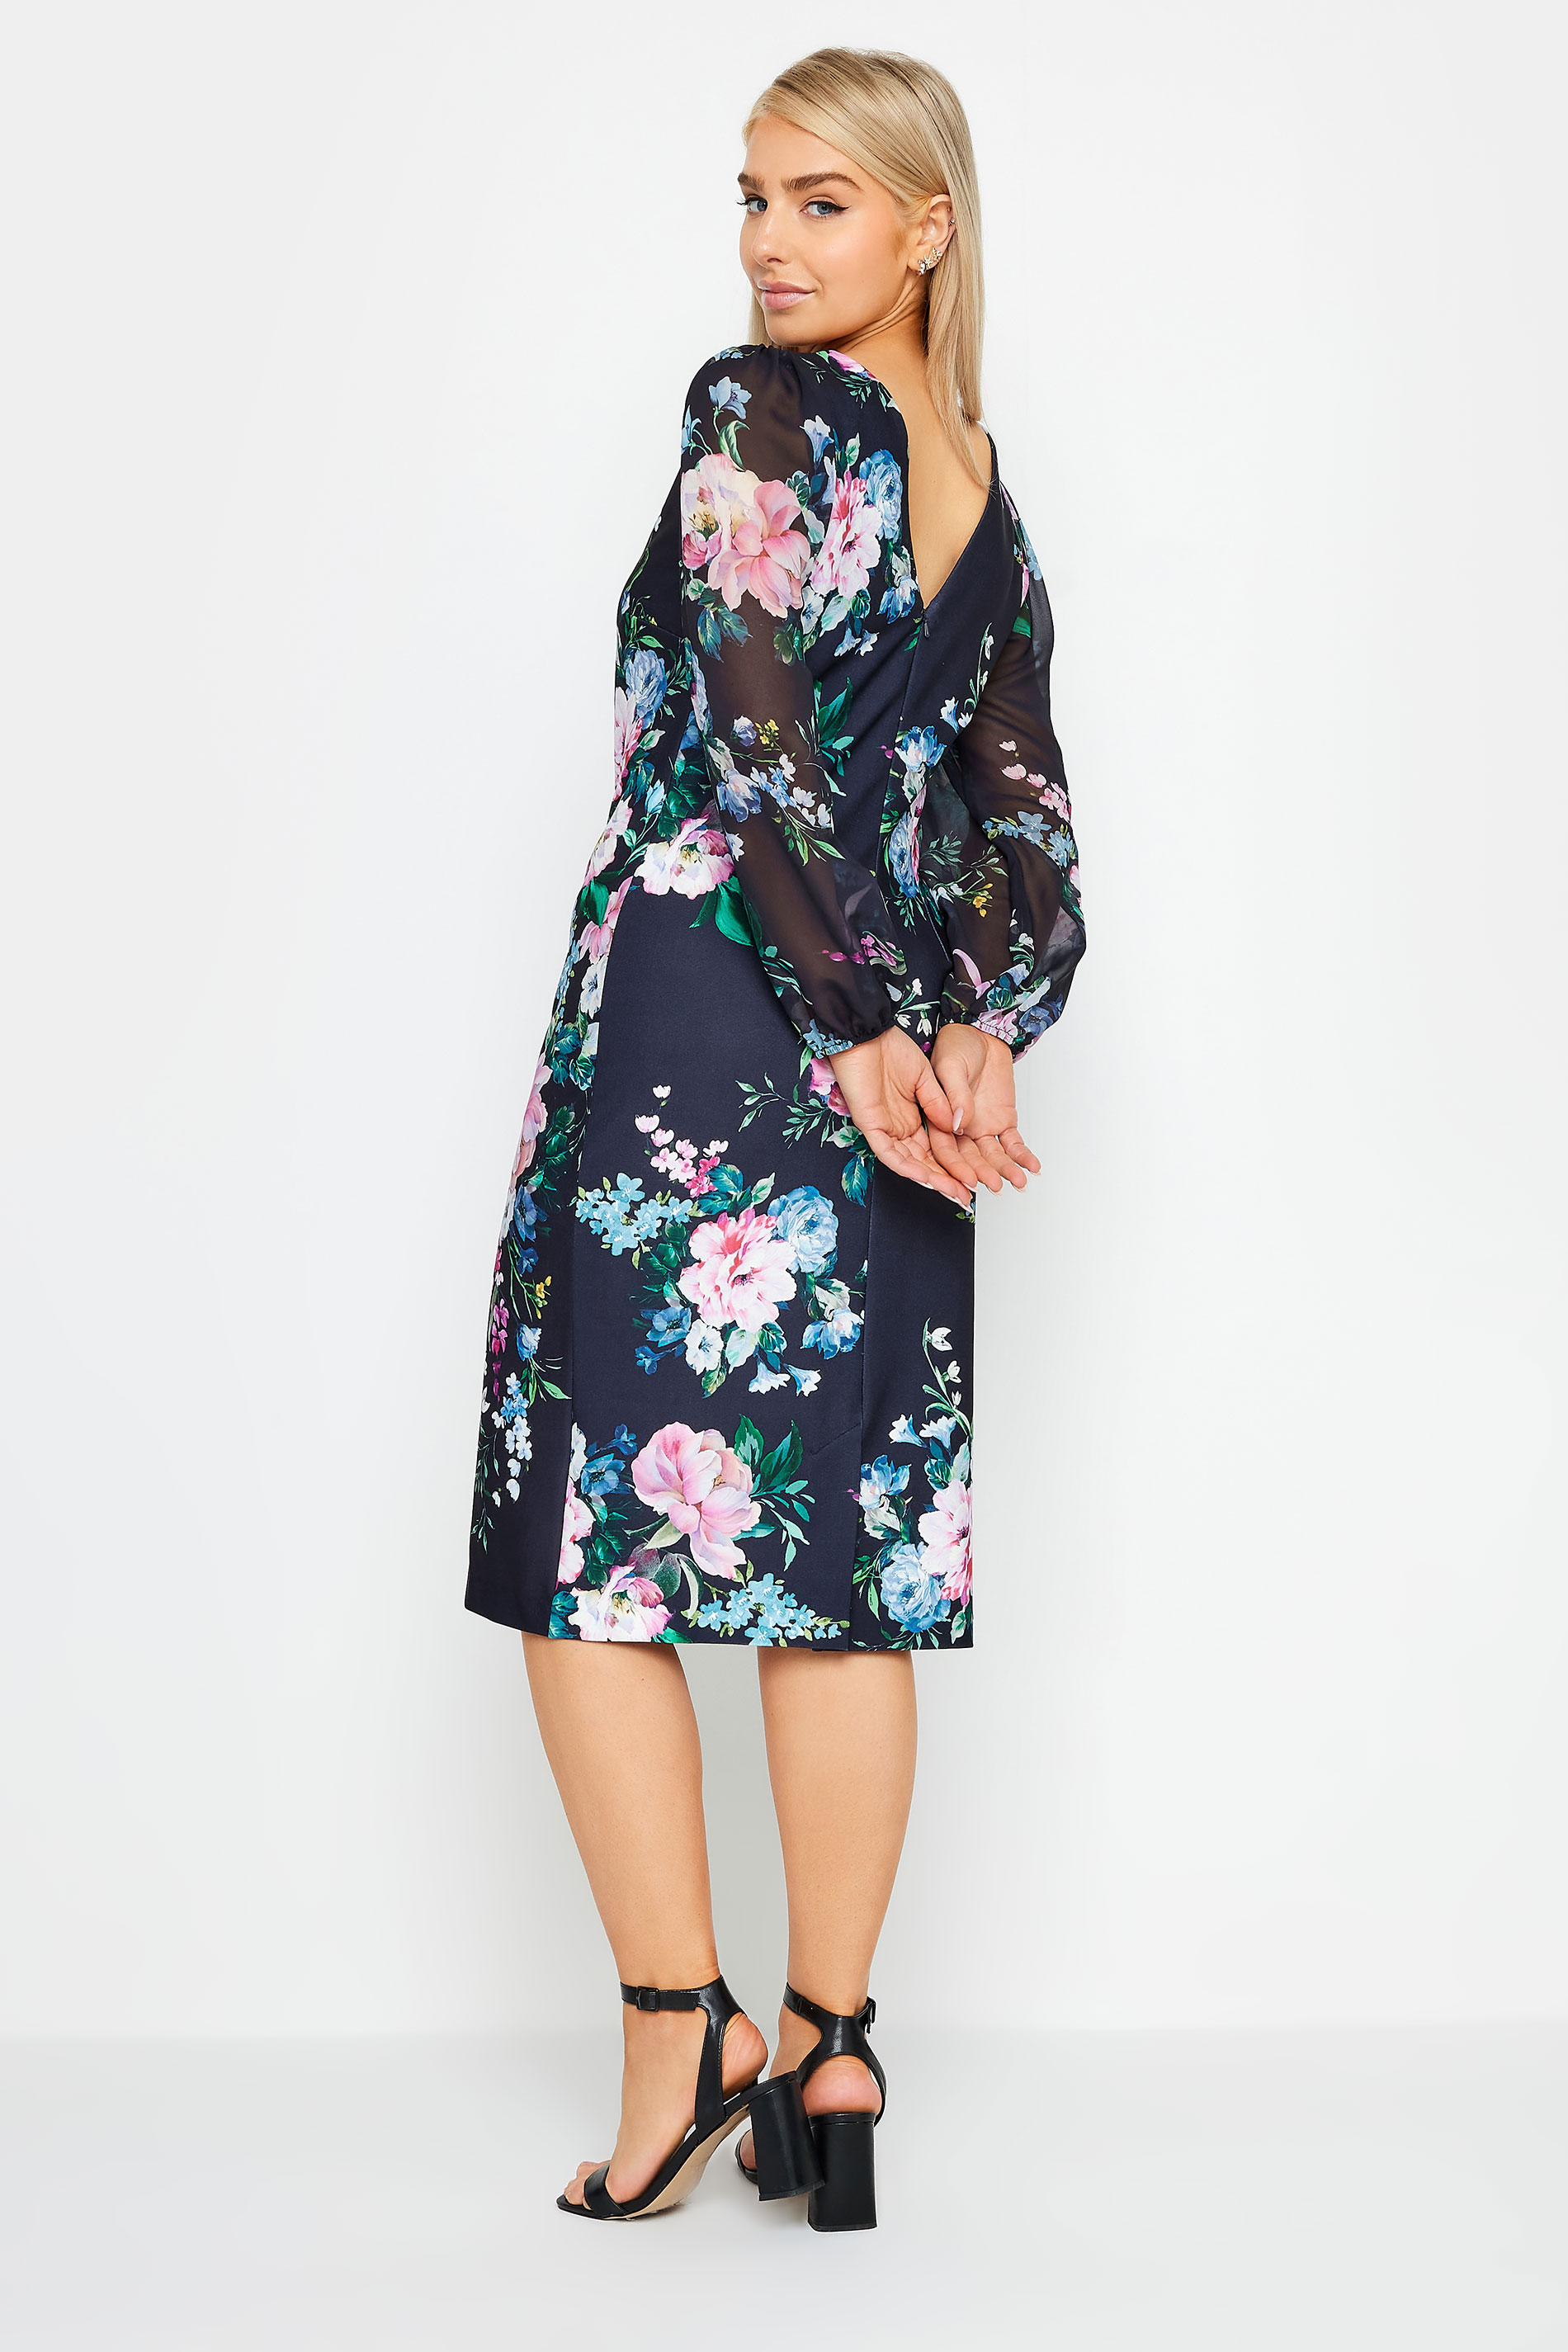 M&Co Navy Blue Floral Print Chiffon Sleeve Shift Dress | M&Co 2